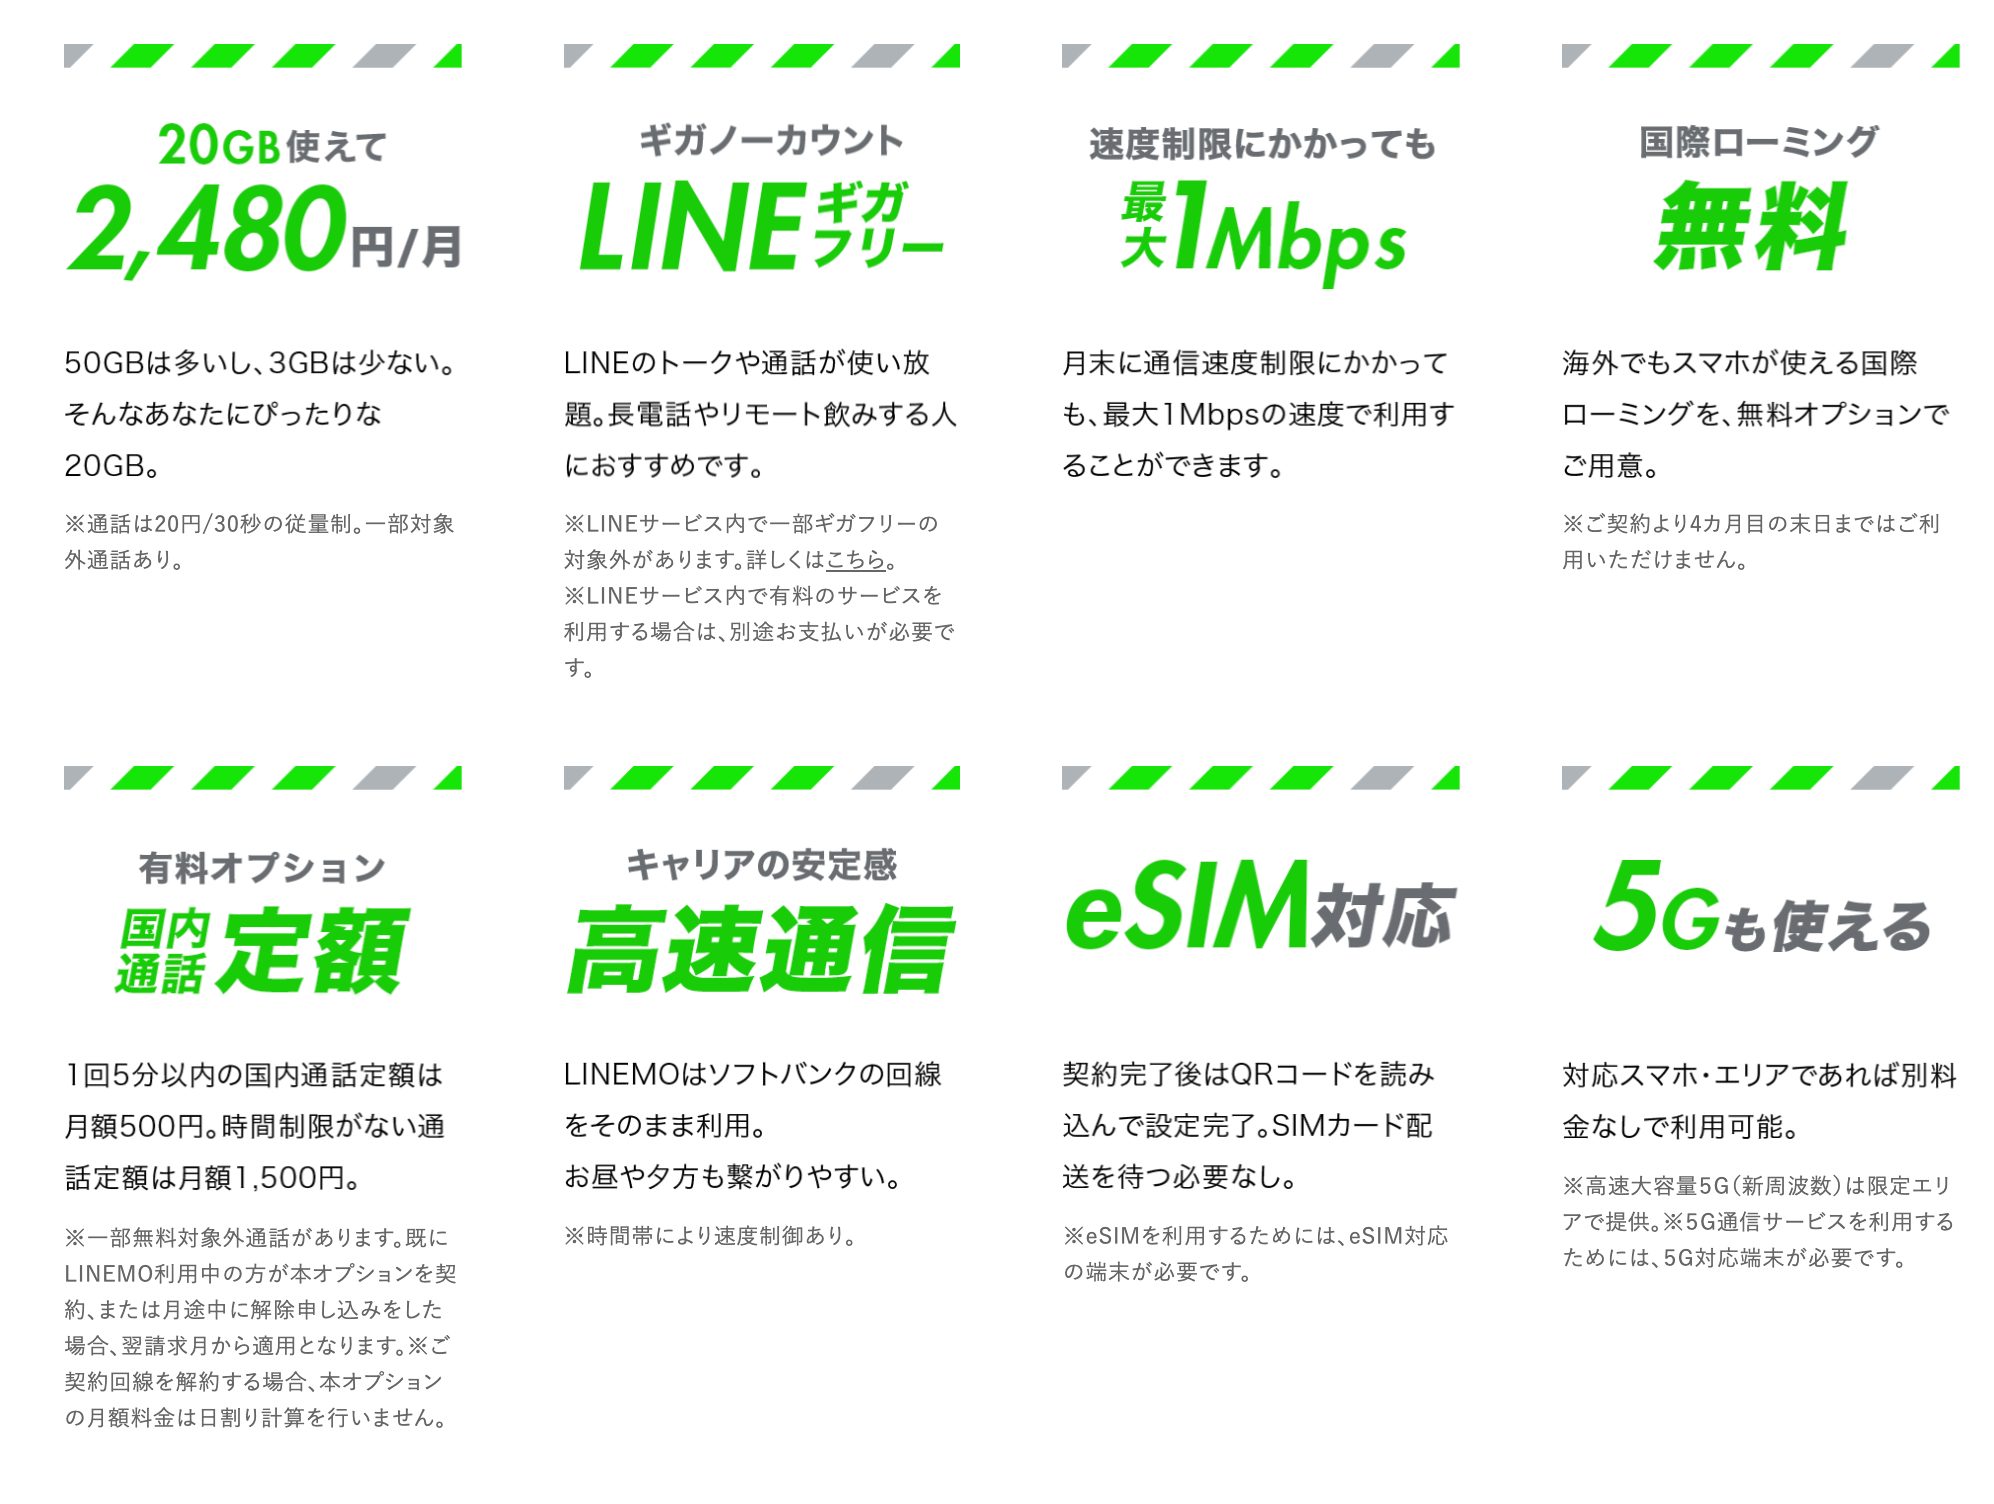 linemo-info-all 絶対に格安SIM選びで失敗しないLINEMO(ラインモ)の解説サイト